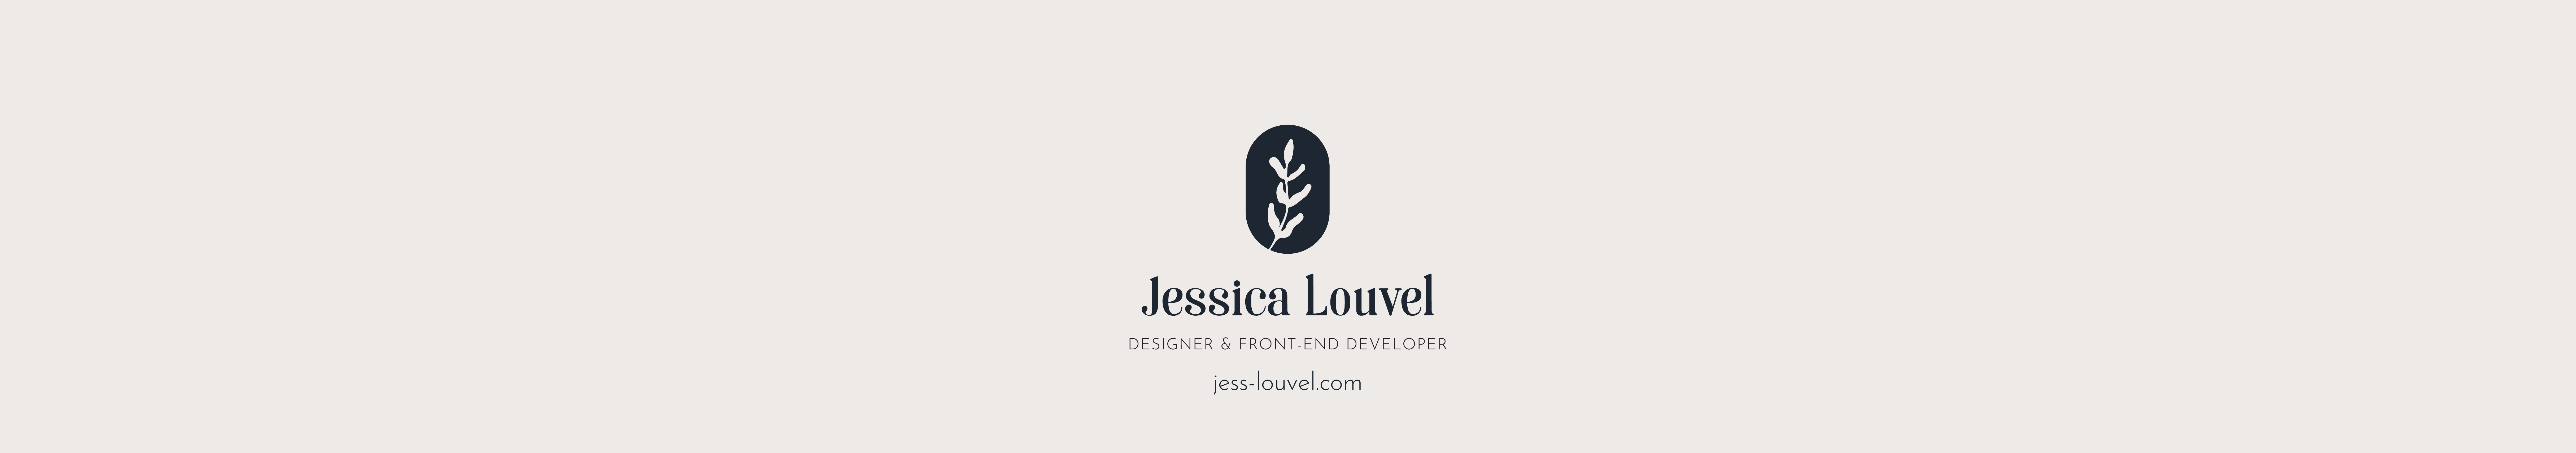 Jessica Louvel profil başlığı